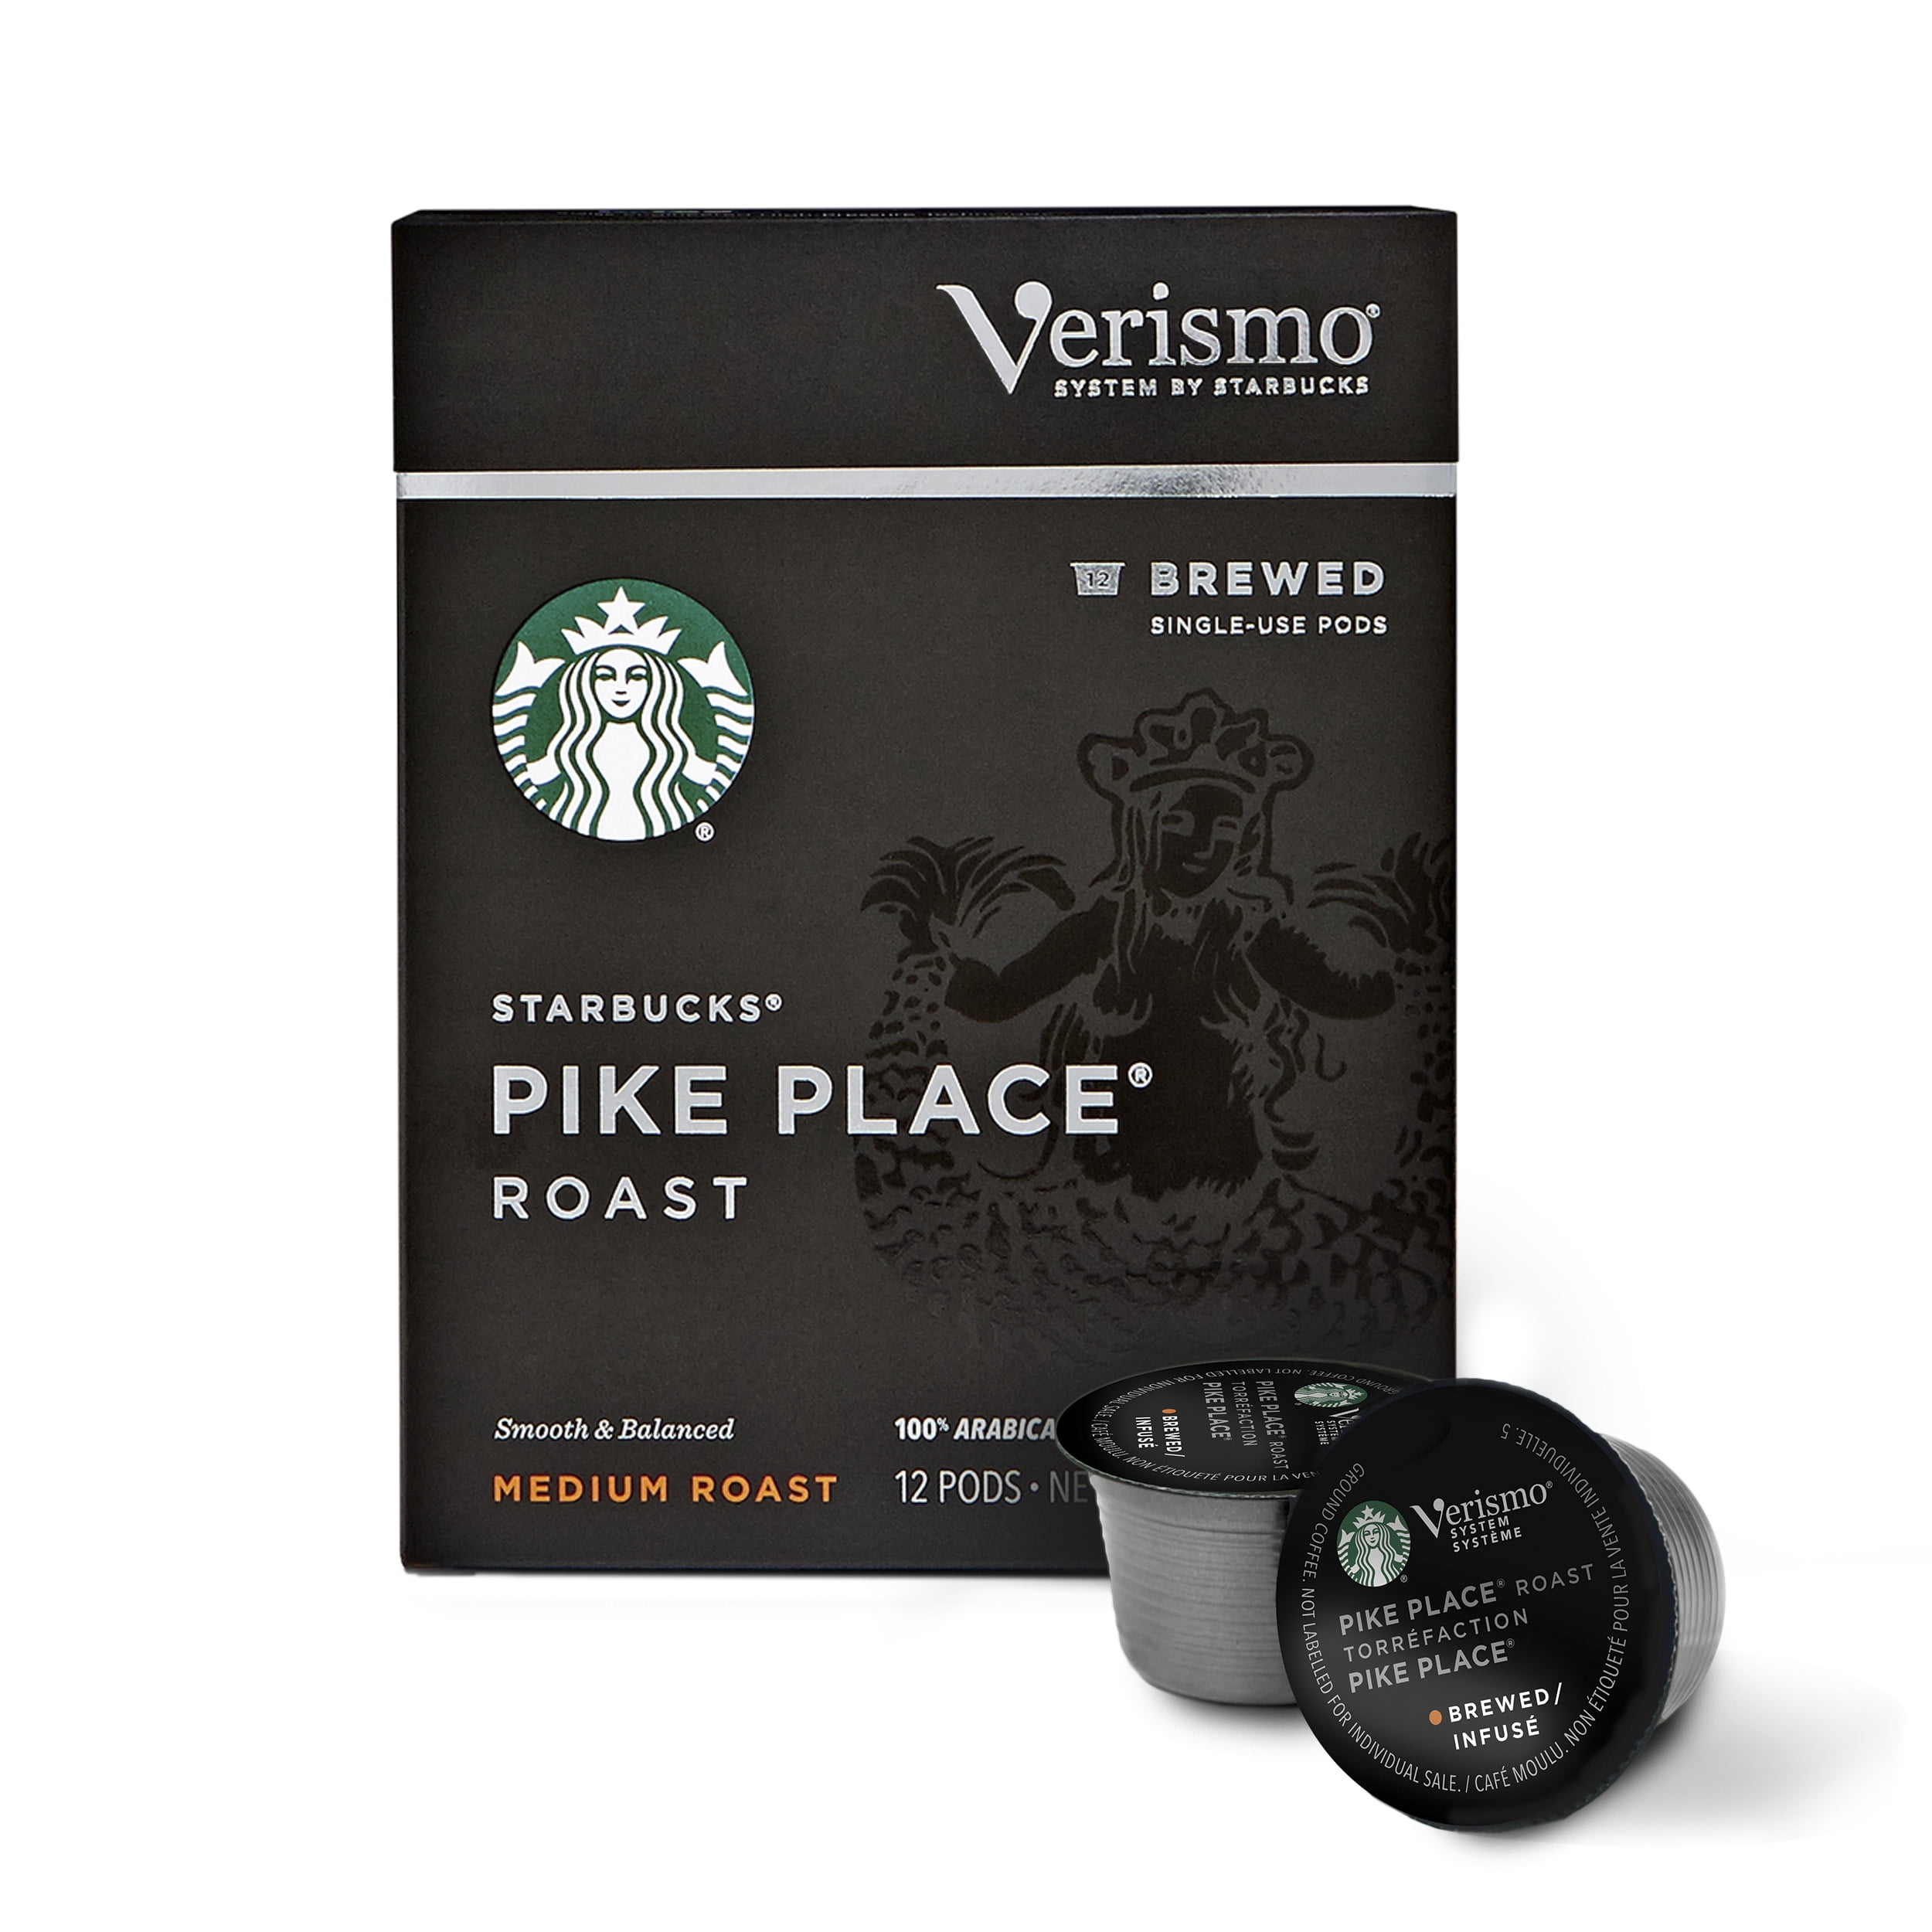 Starbucks launches Verismo V Brewer, 2016-10-19